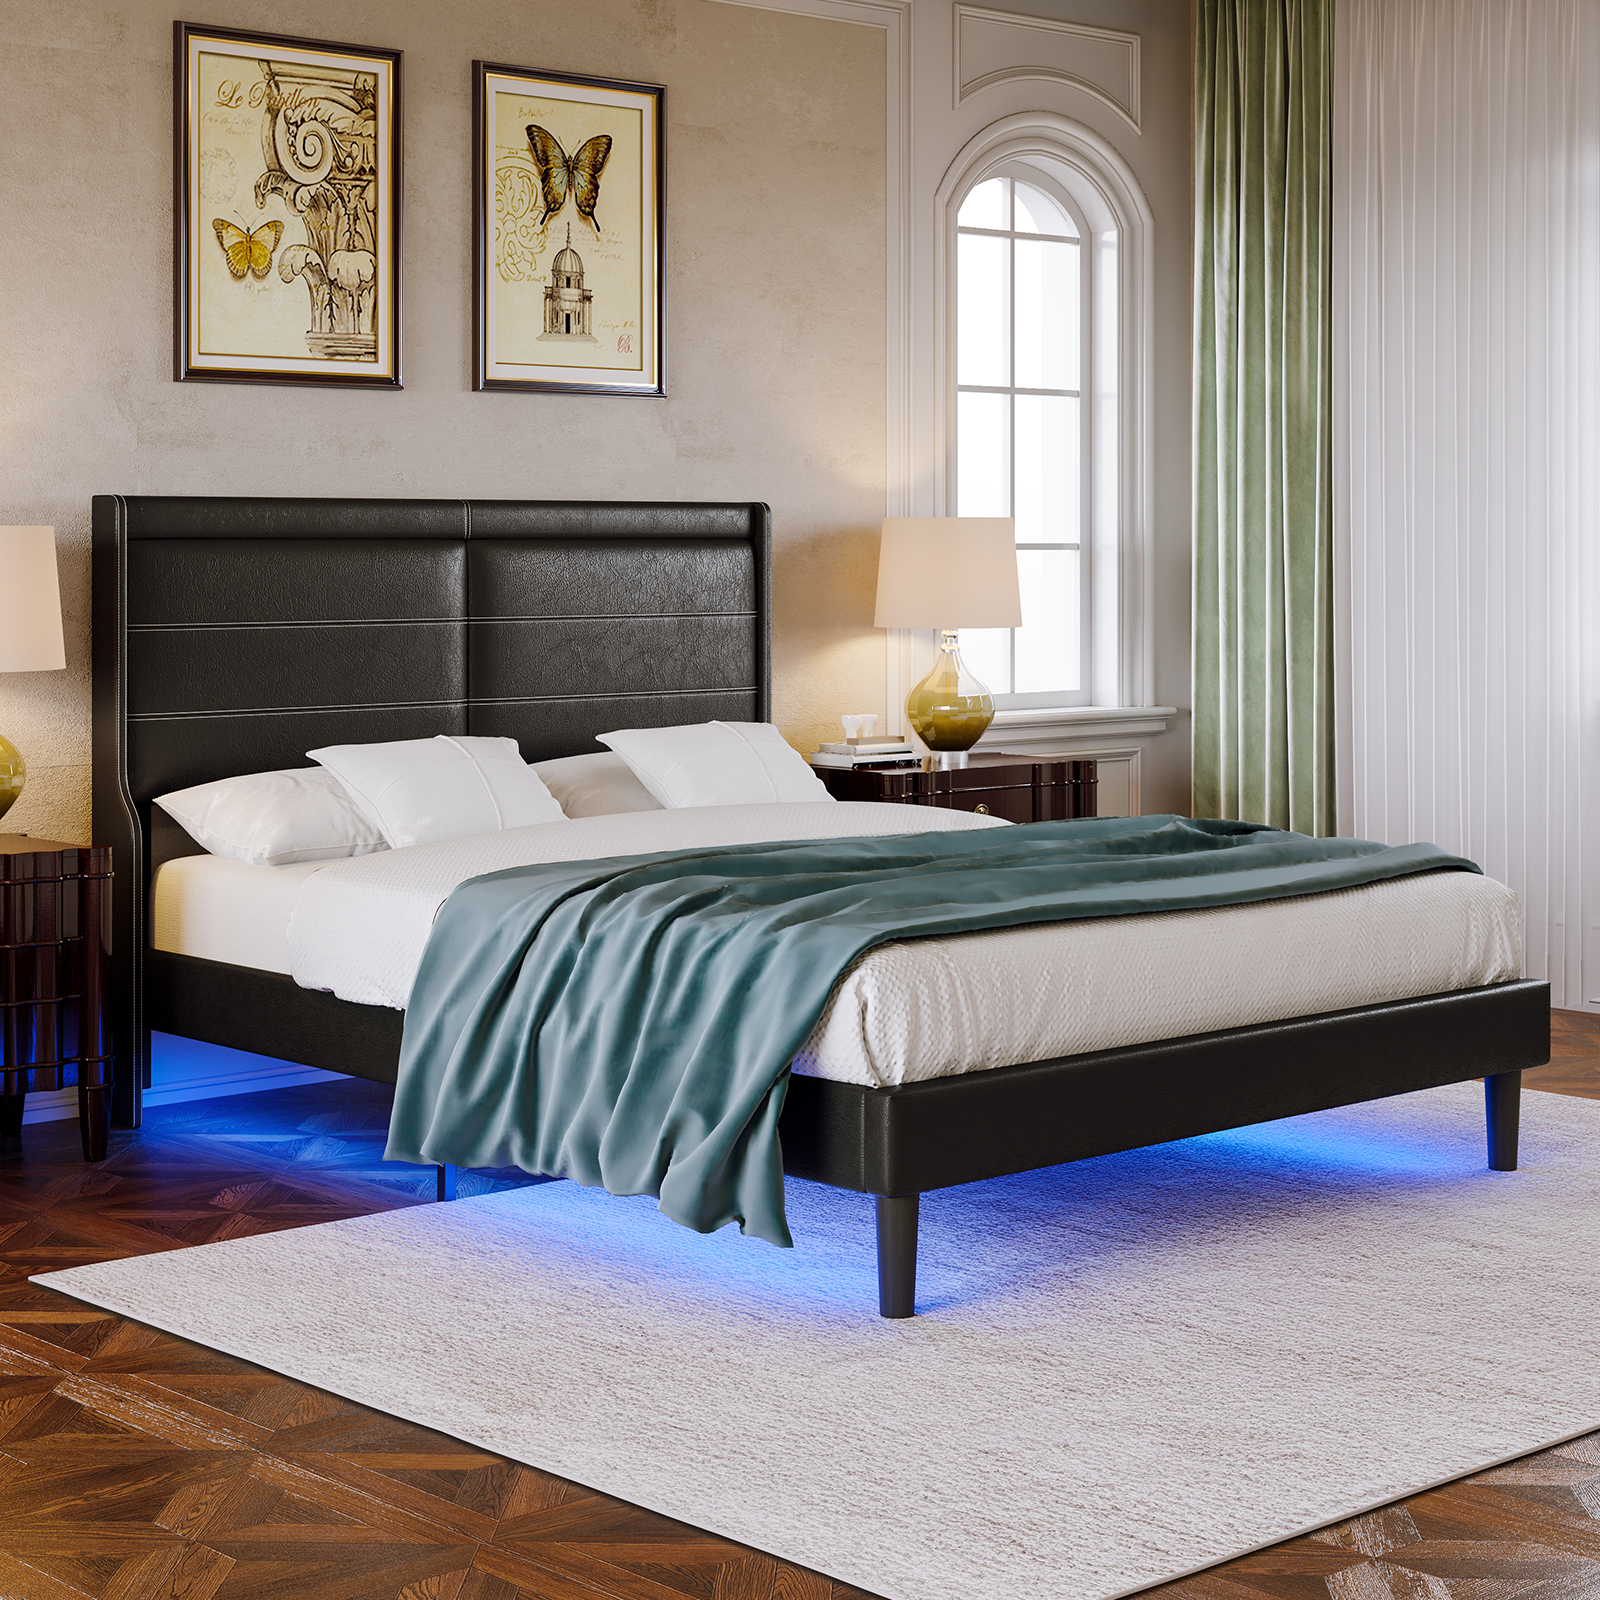 Queen Size PU Leather Upholstered Bed Frame Platform Bed Frame with Led Lights - $286.75